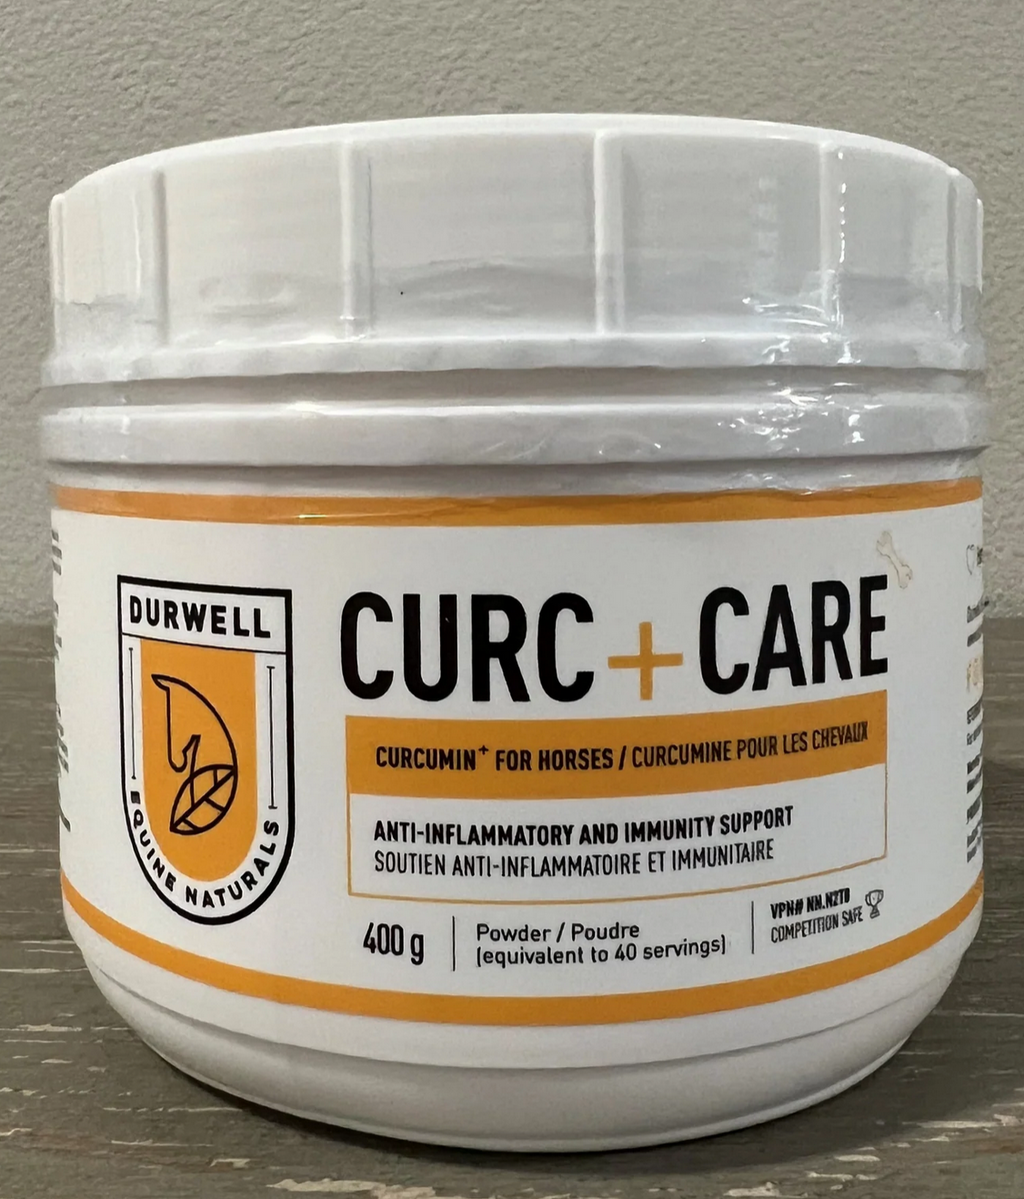 Durwell curc+care immunity support (400g)